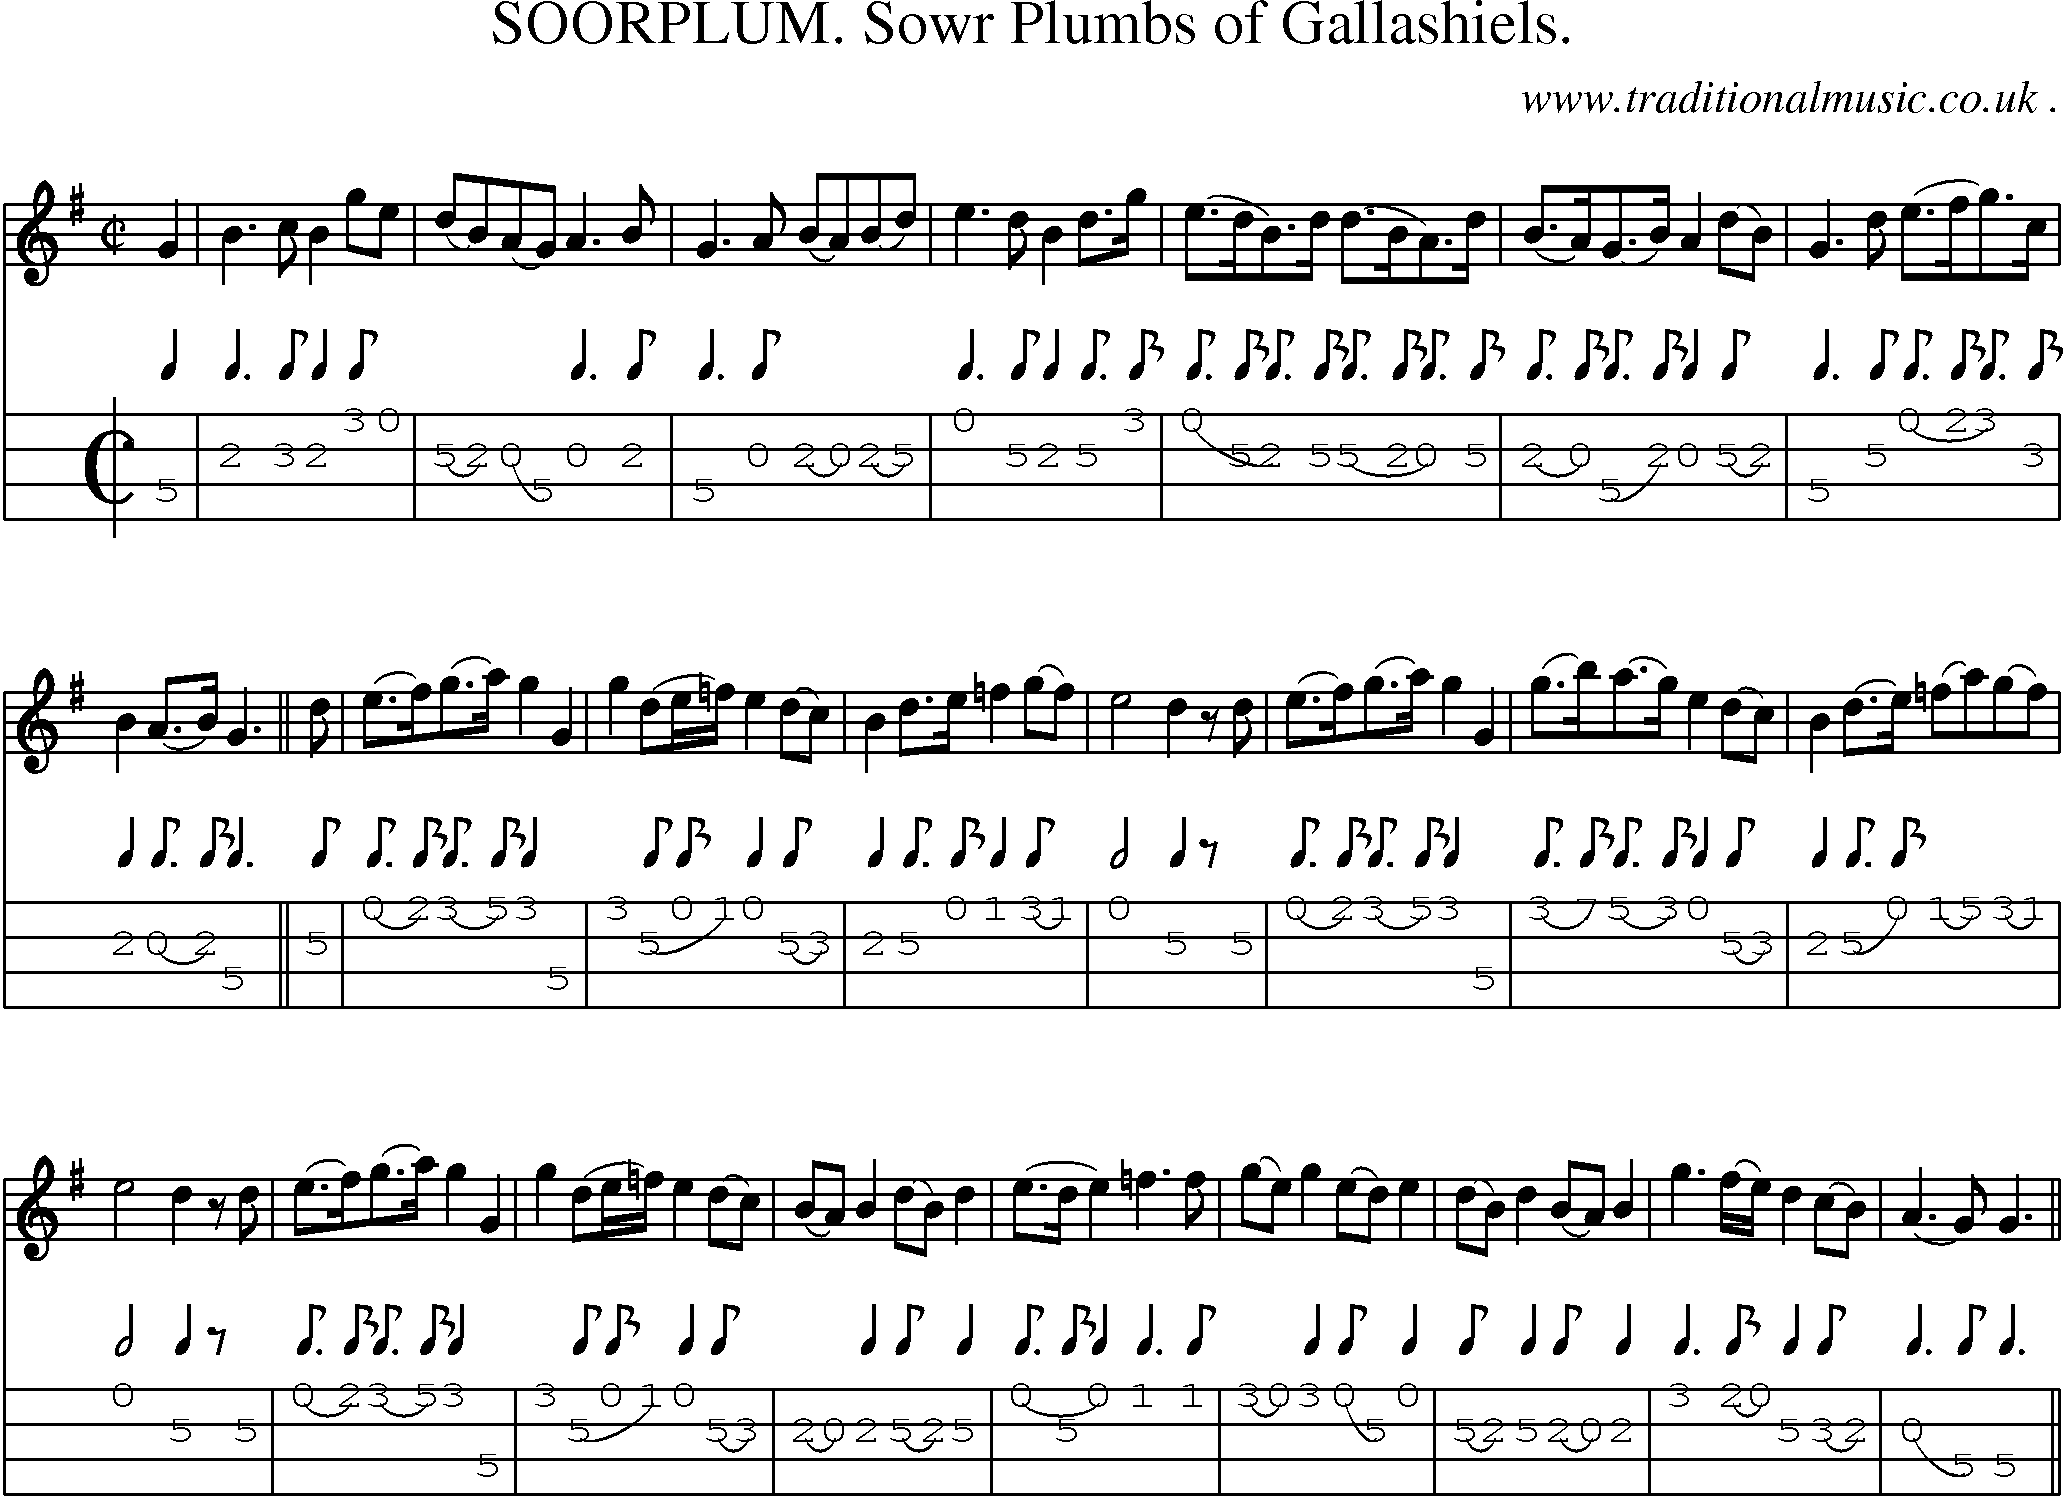 Sheet-Music and Mandolin Tabs for Soorplum Sowr Plumbs Of Gallashiels